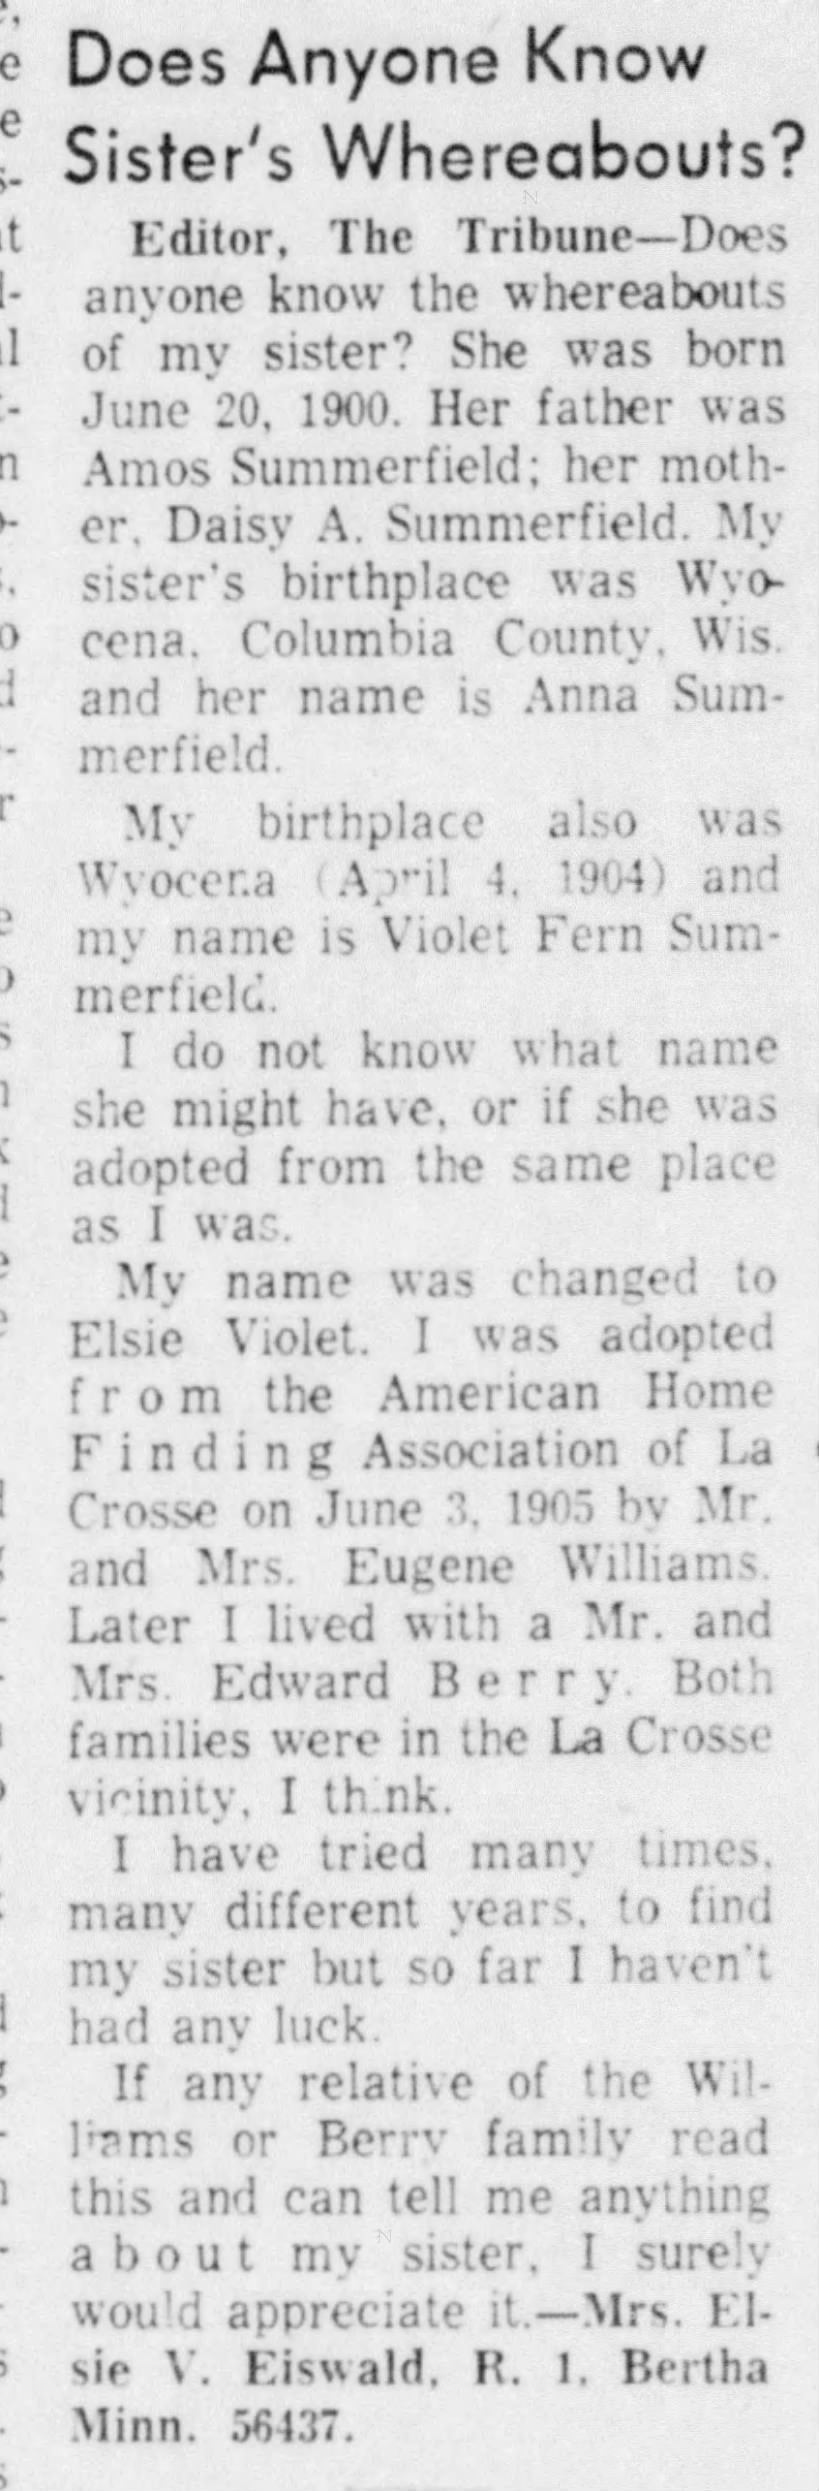 Elsie V. Eiswald asking for info on sister.